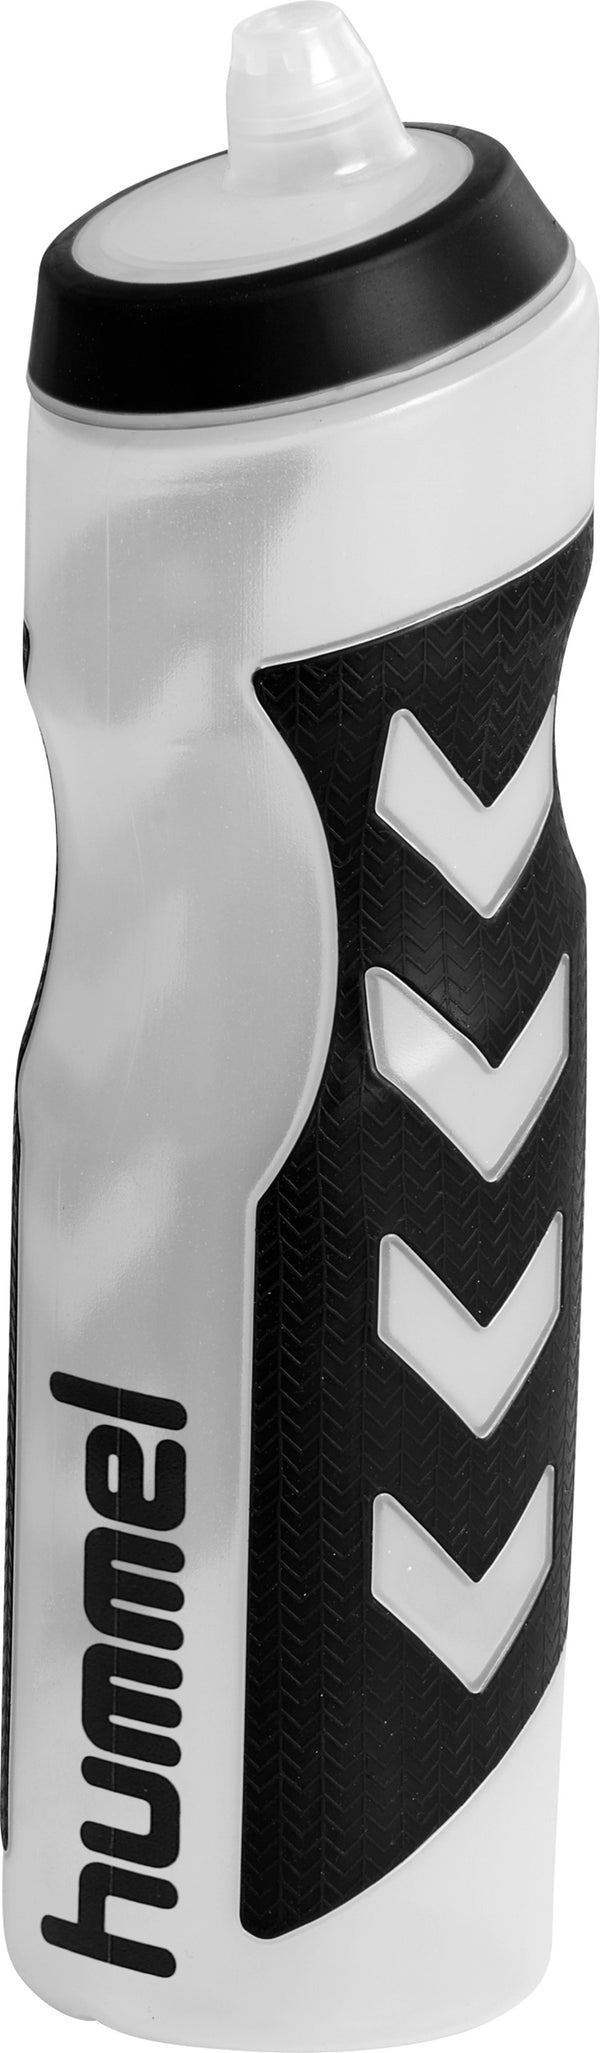 Hummel Water Bottle-Soccer Command